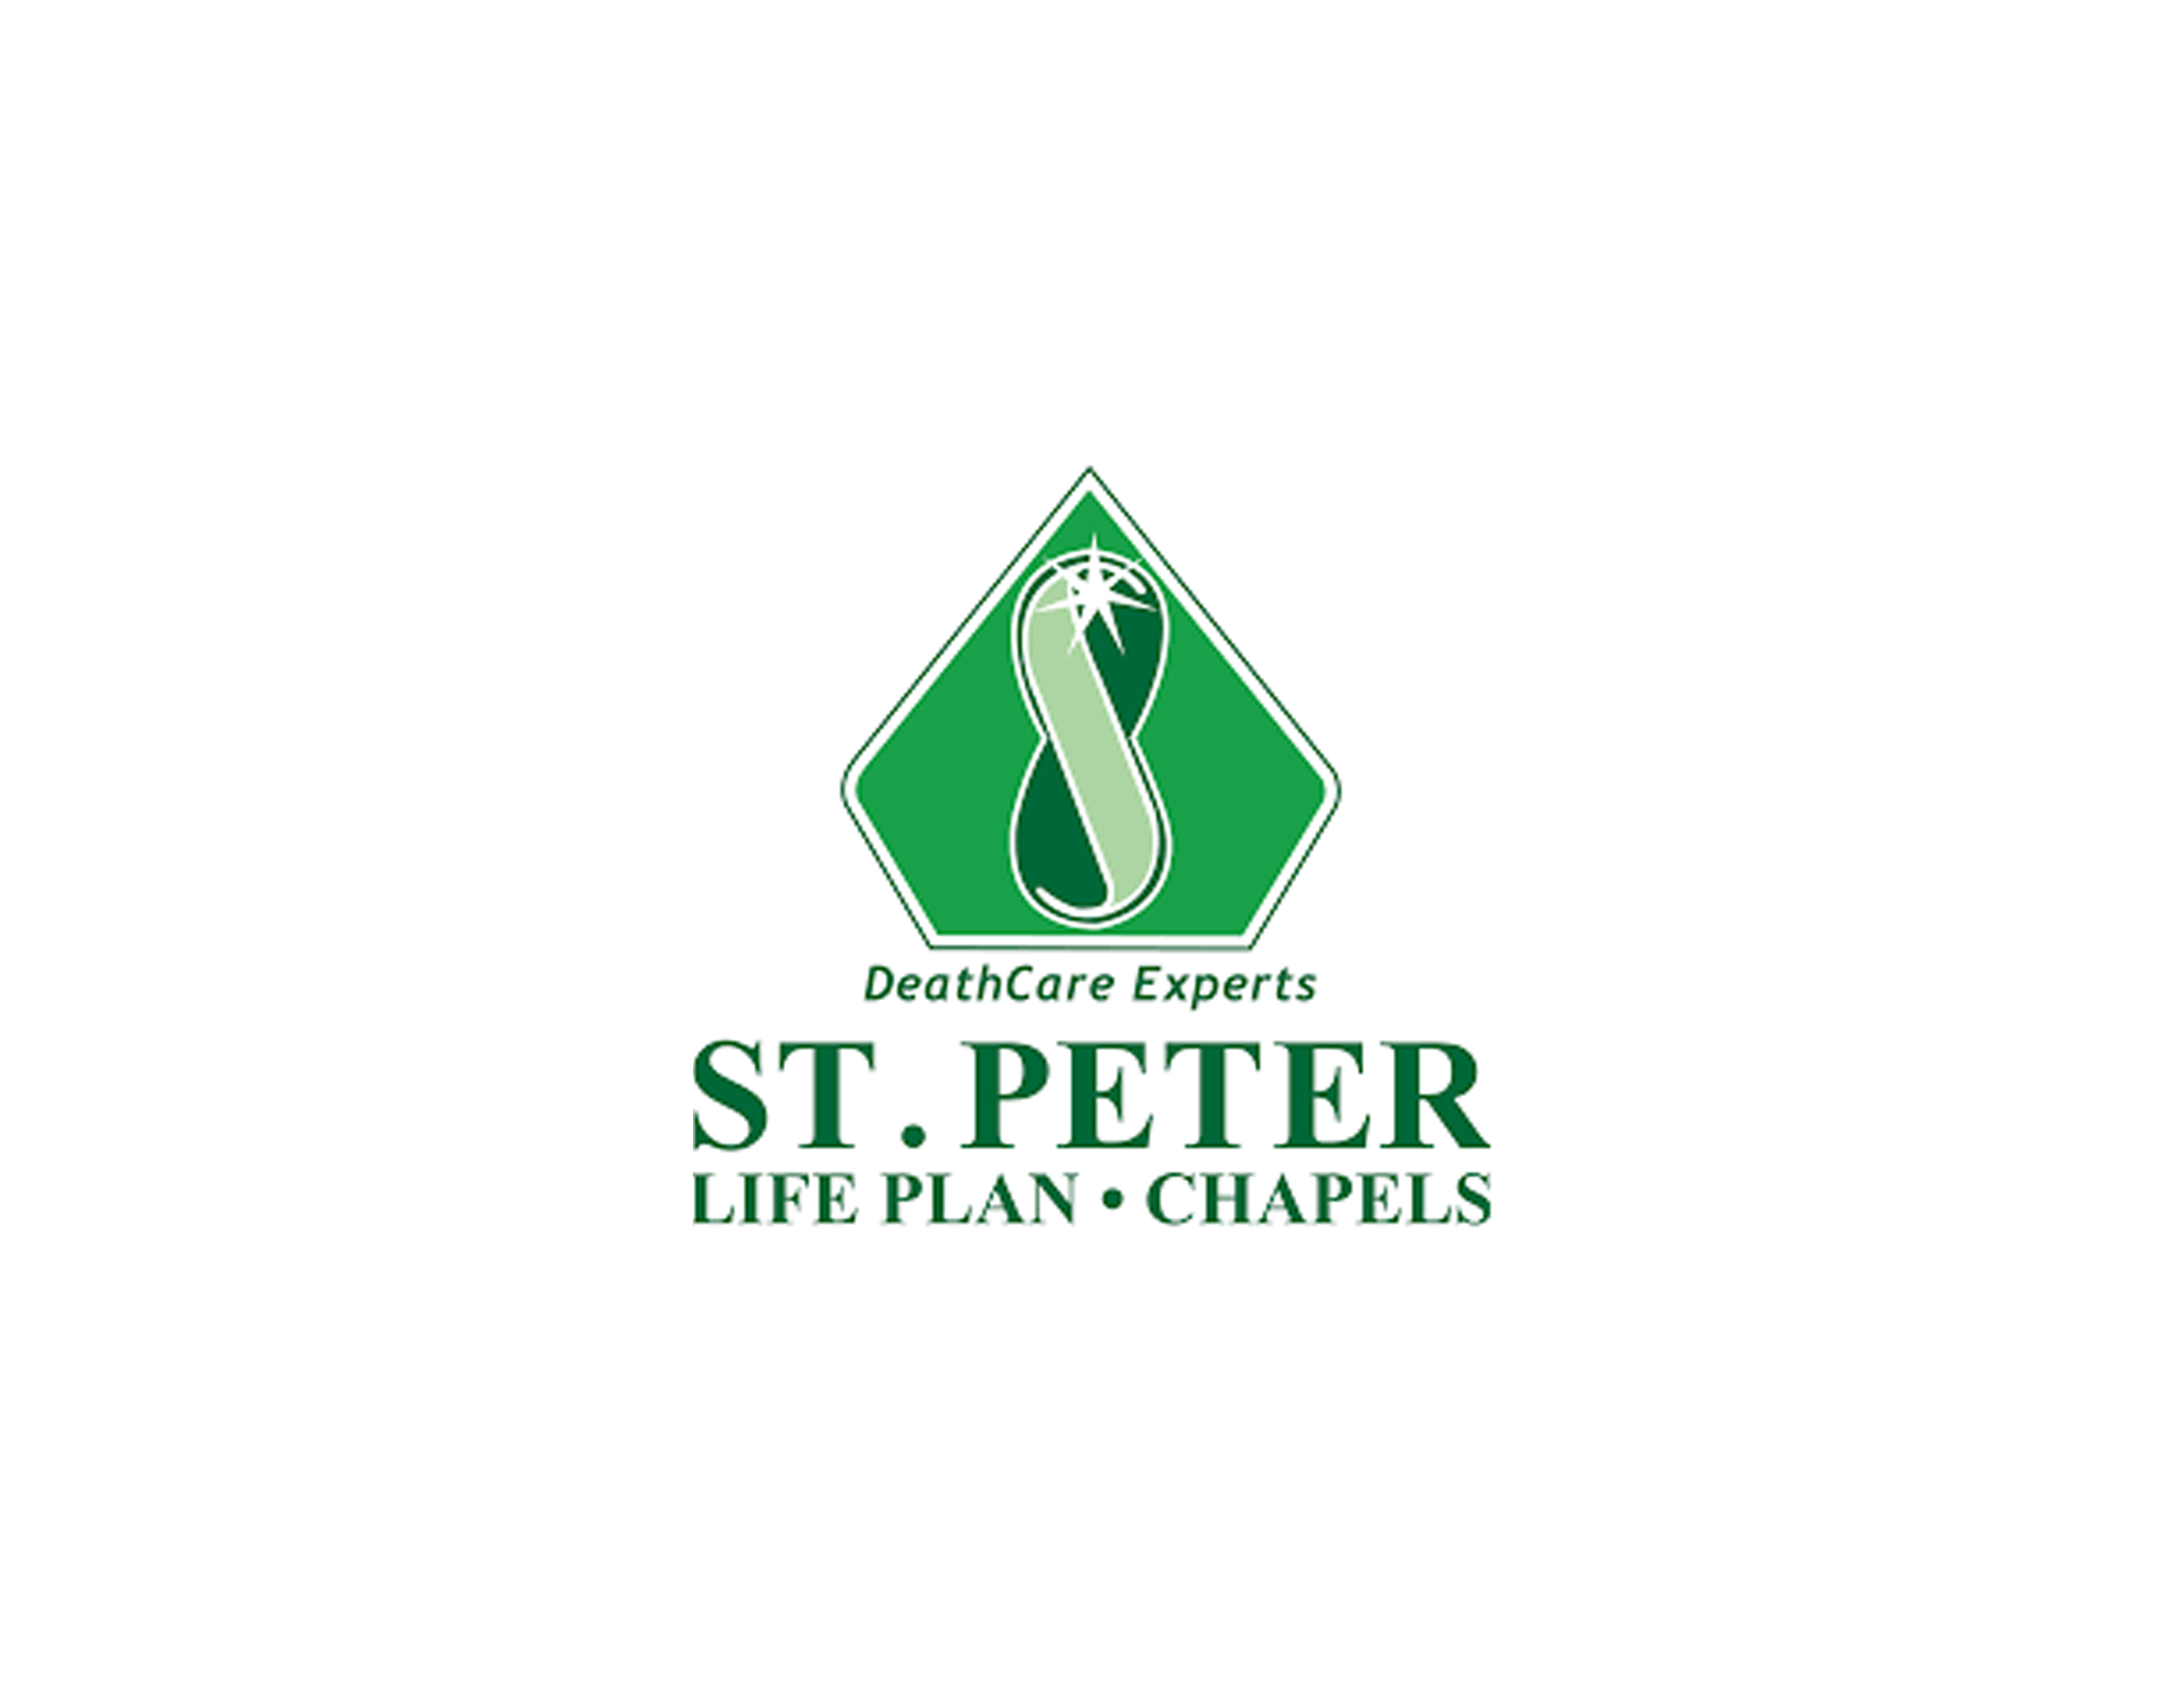 St. Peter Life Plan